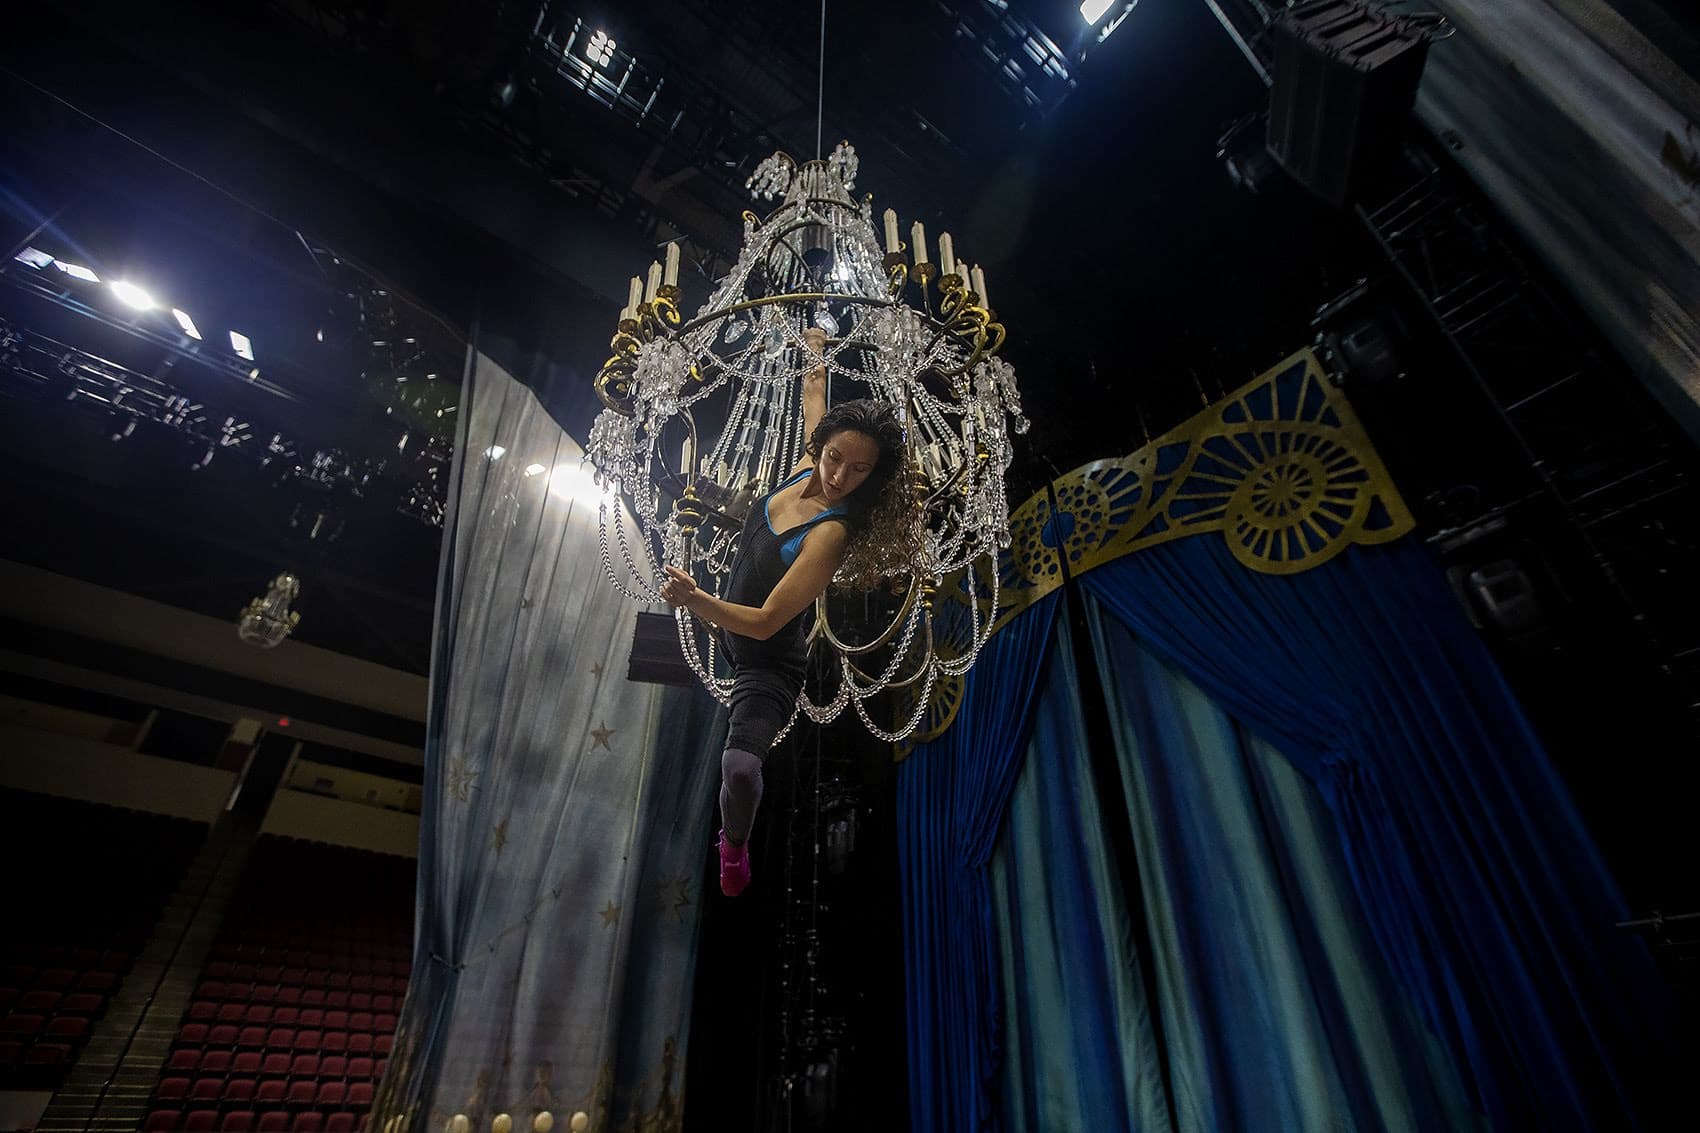 Sante Fortunato during a Cirque Du Soleil rehearsal at Agganis Arena in Boston. (Jesse Costa/WBUR)